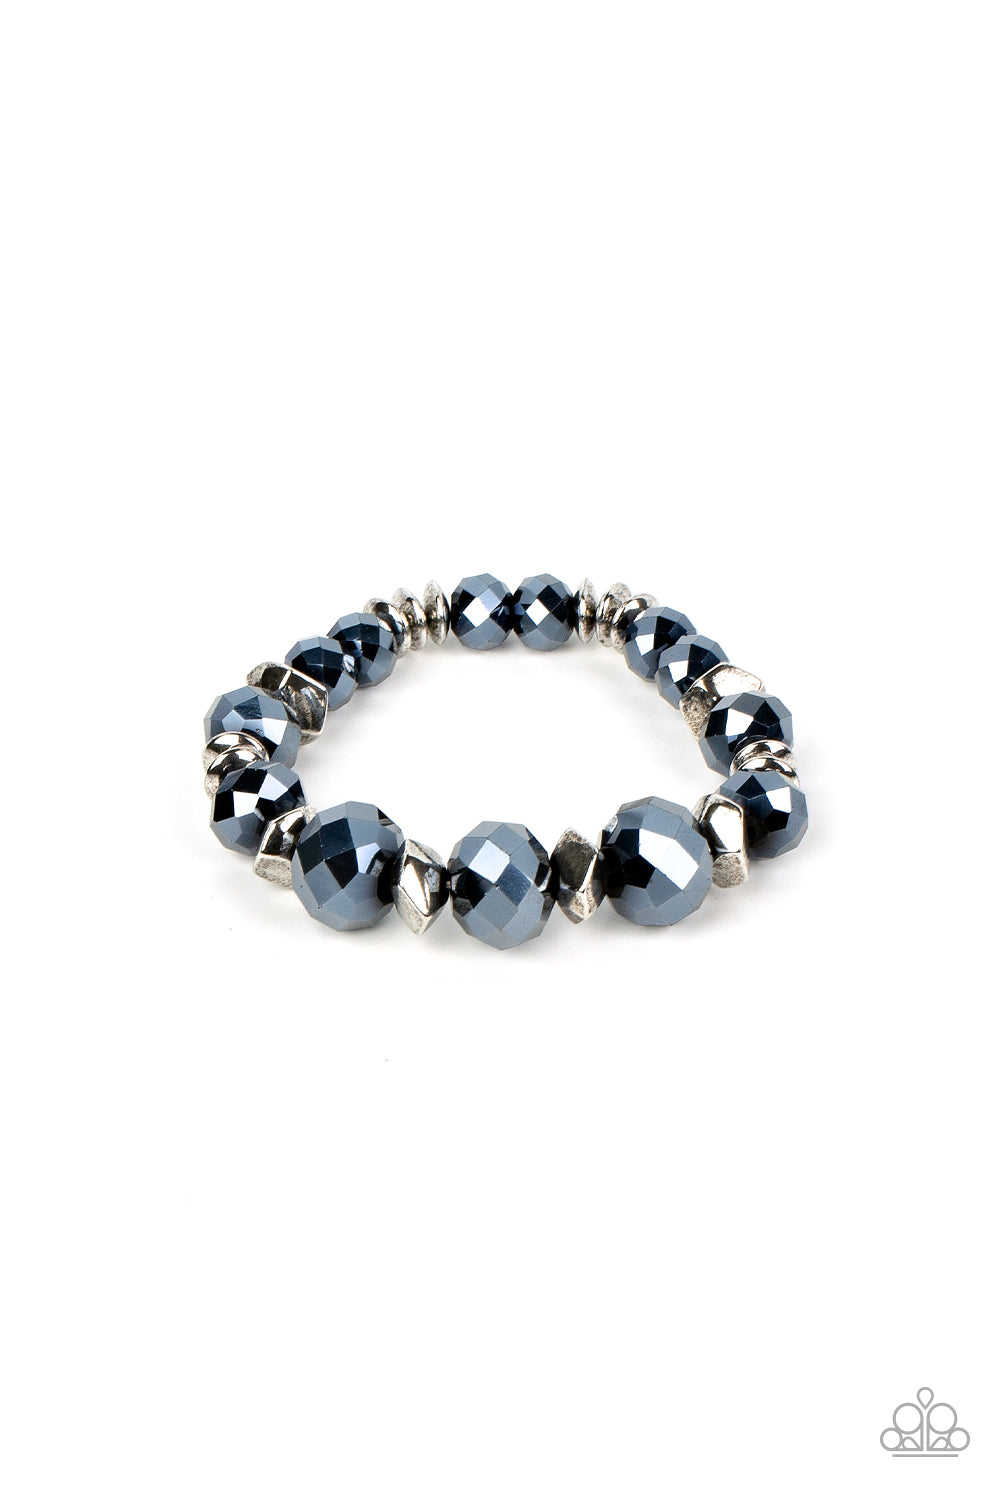 Astral Auras - Blue Bracelet